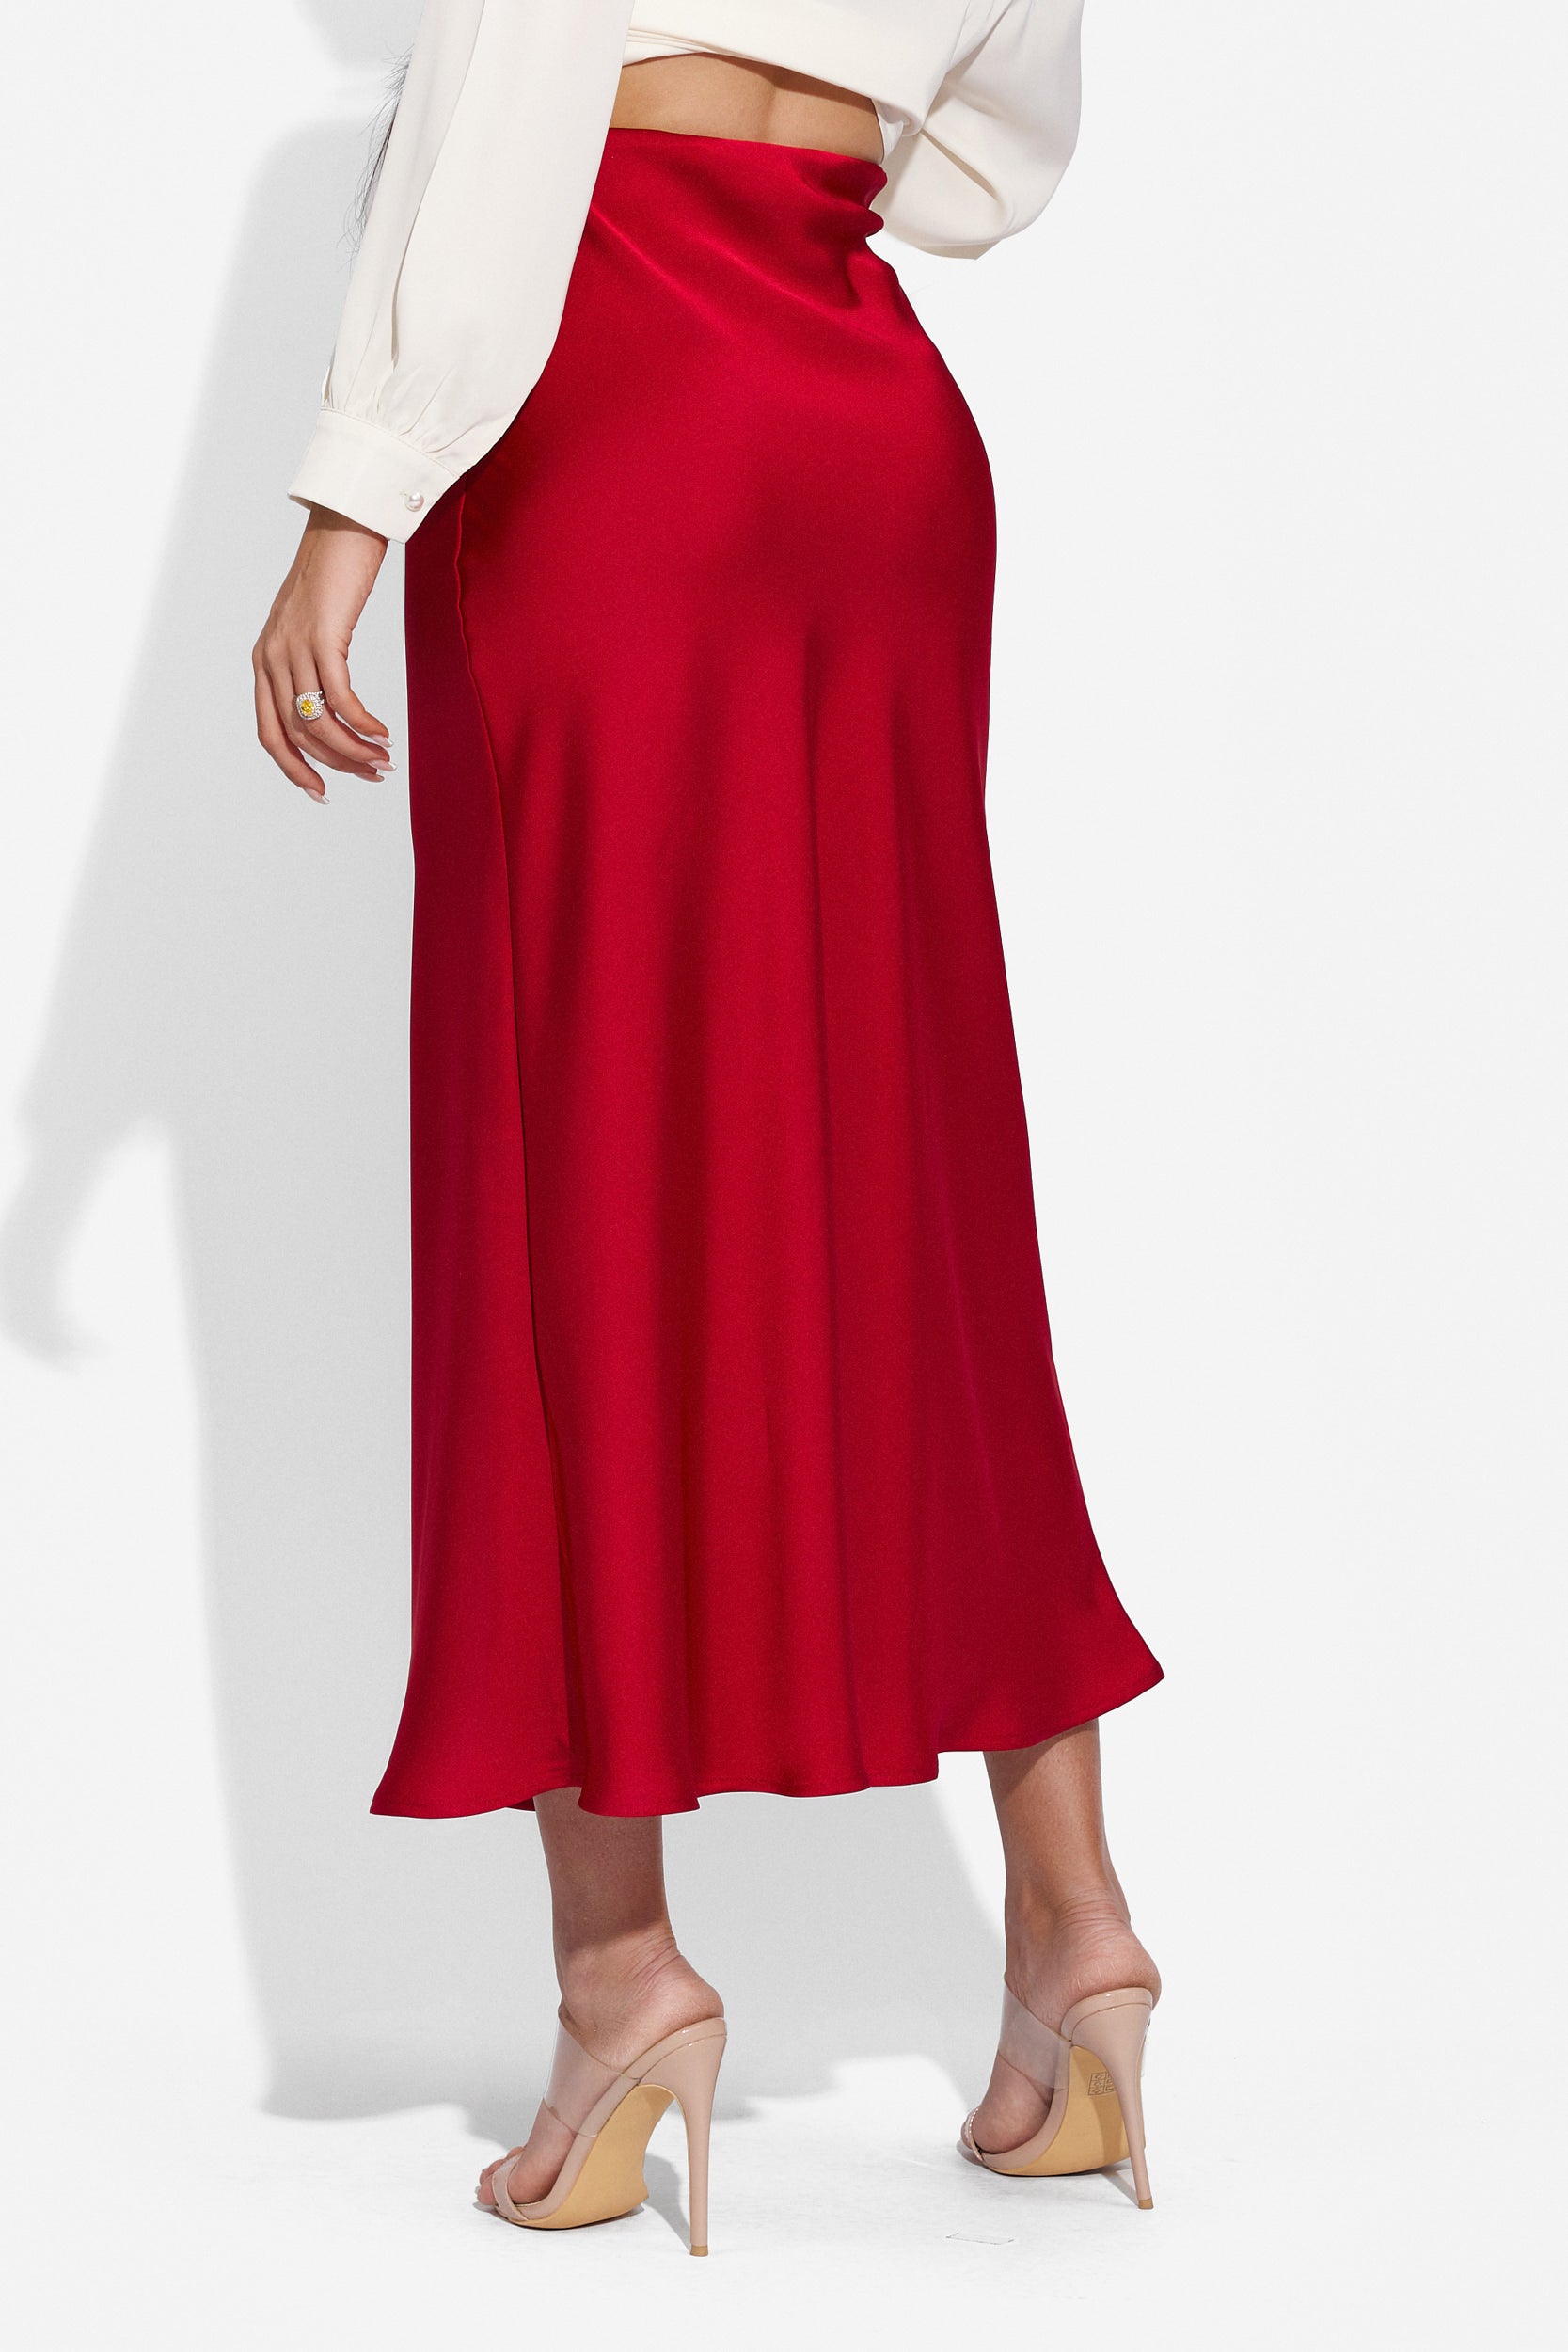 Ladies' long satin skirt in red Rozita Bogas